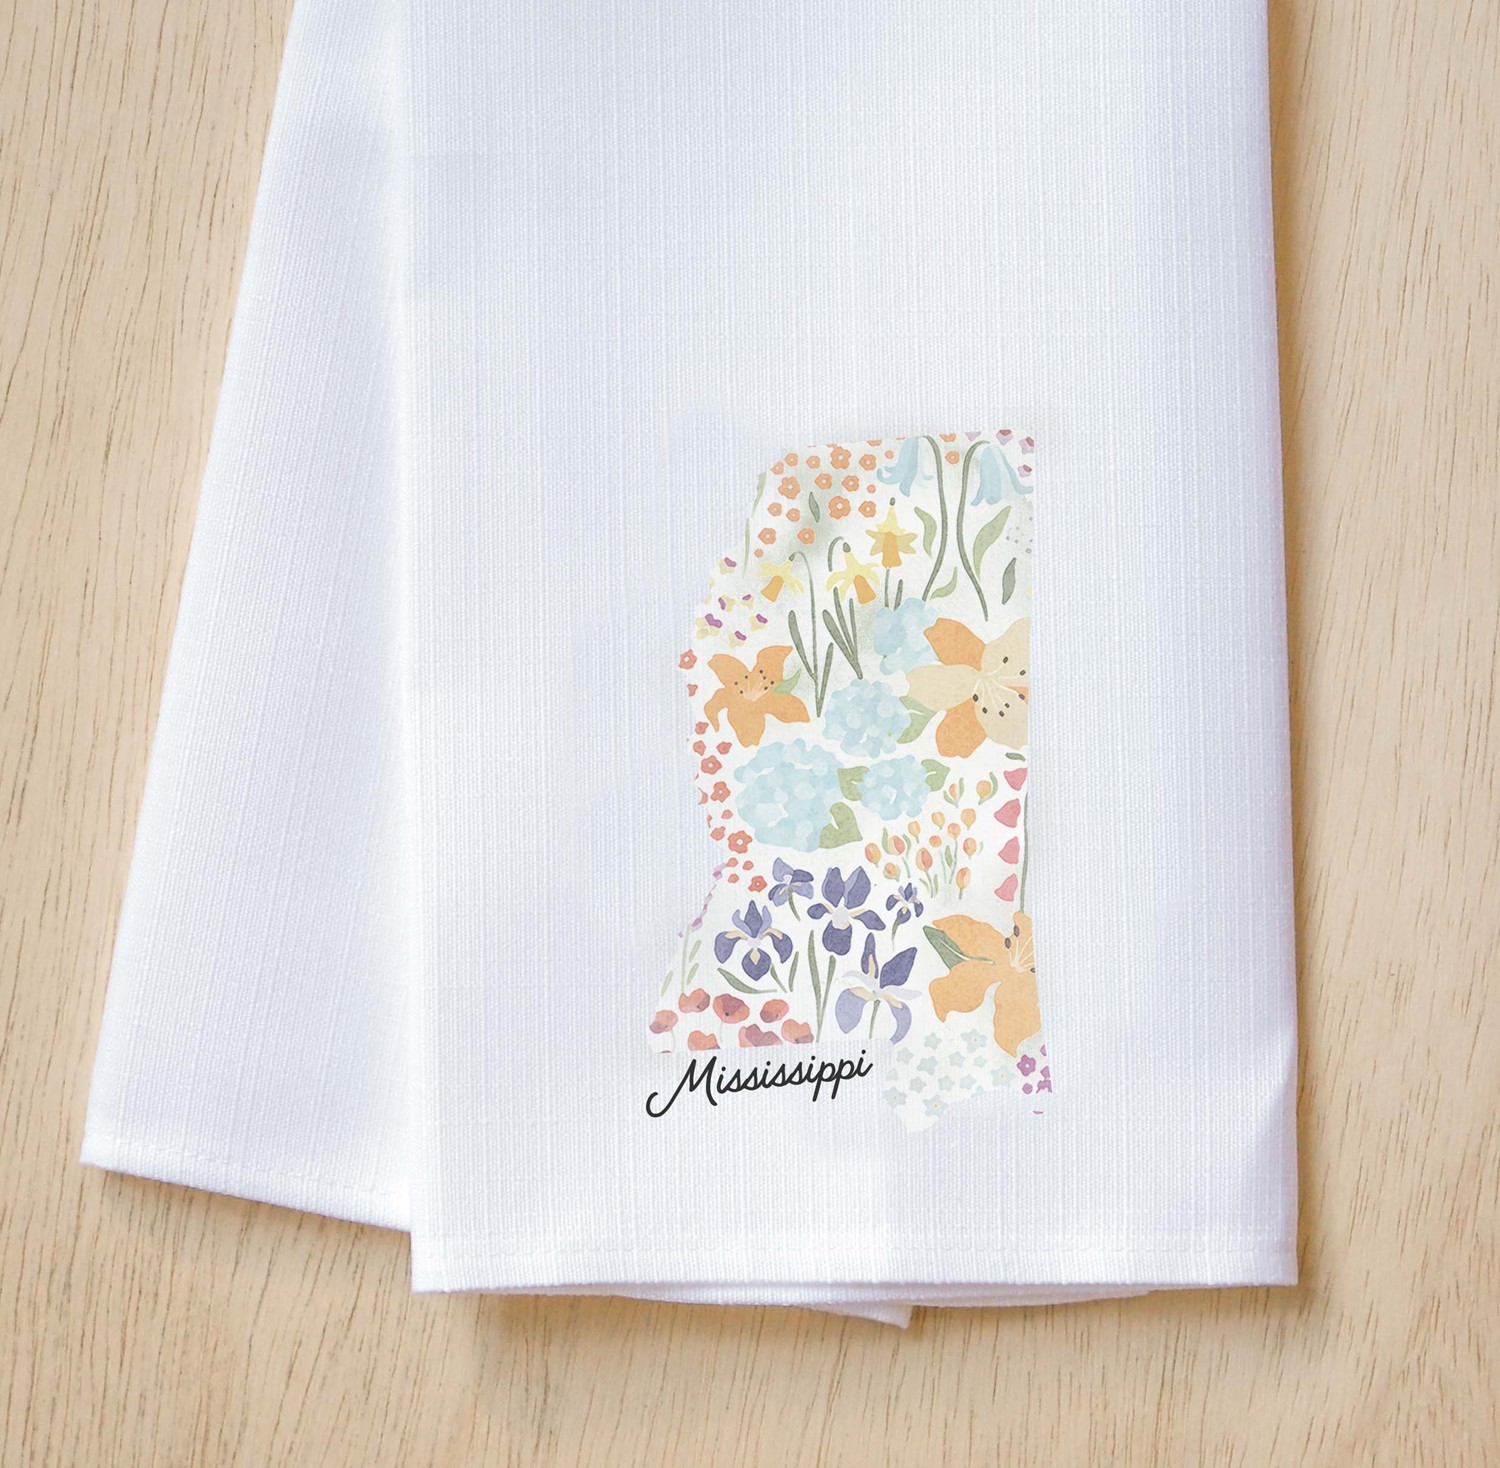 Floral Embroidered Tea Towel